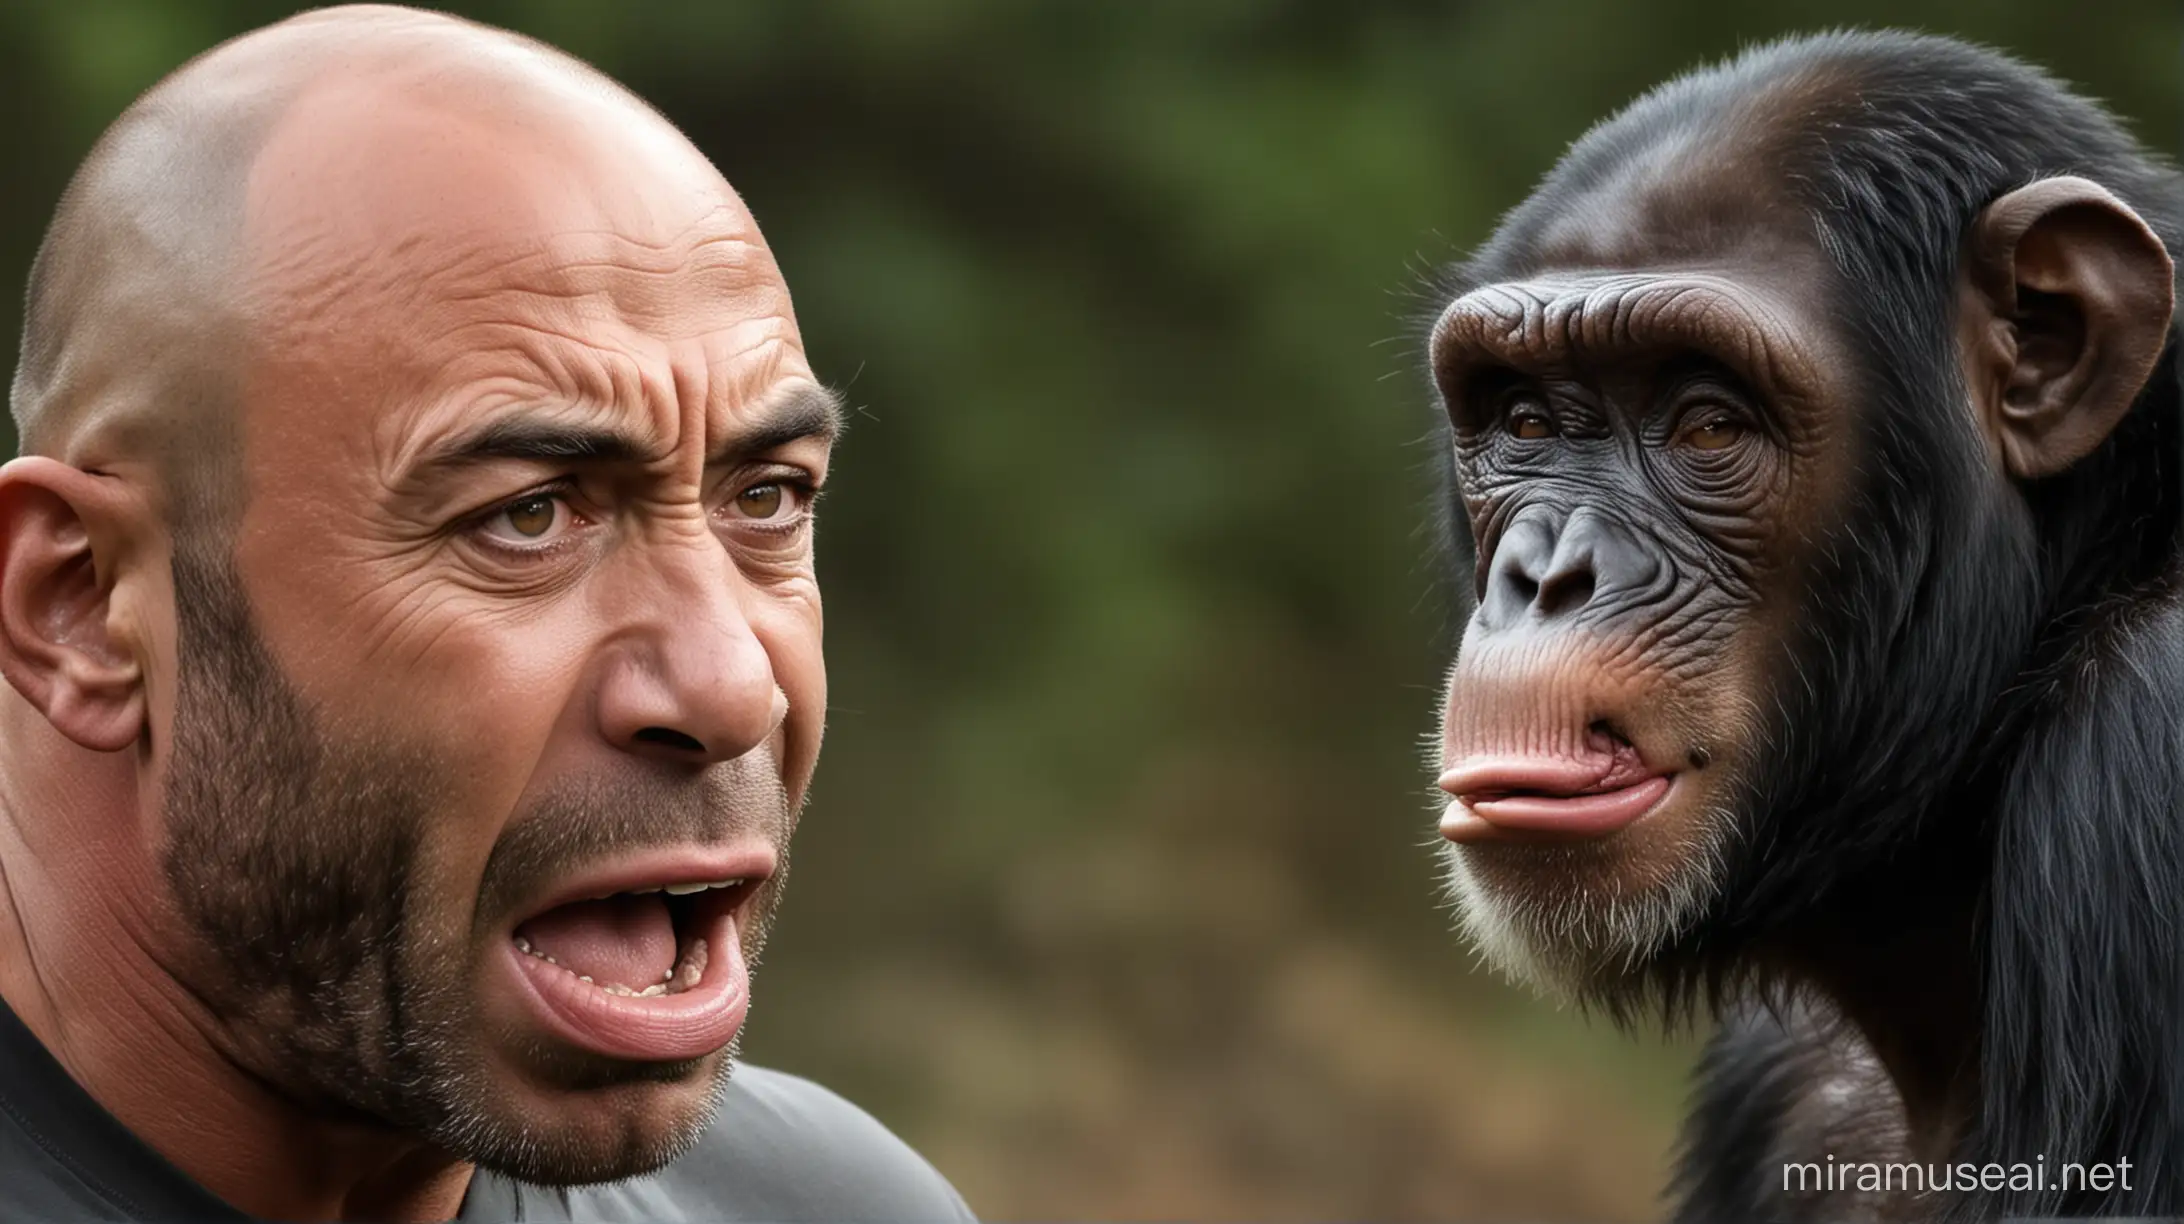 joe rogan scream against massive chimp, angry intense face emotions